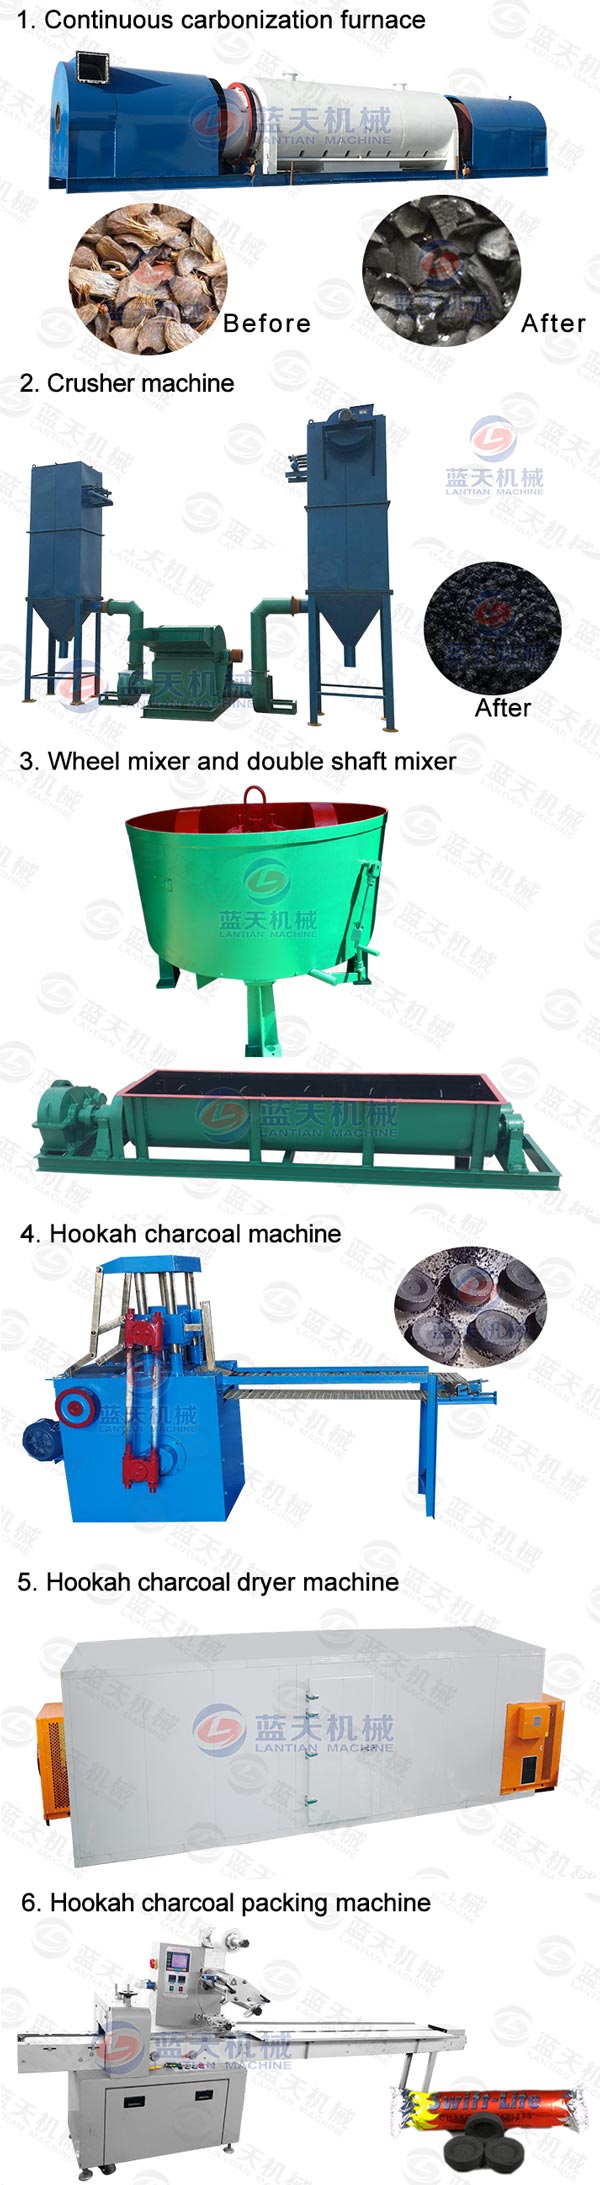 hookah charcoal machine production line